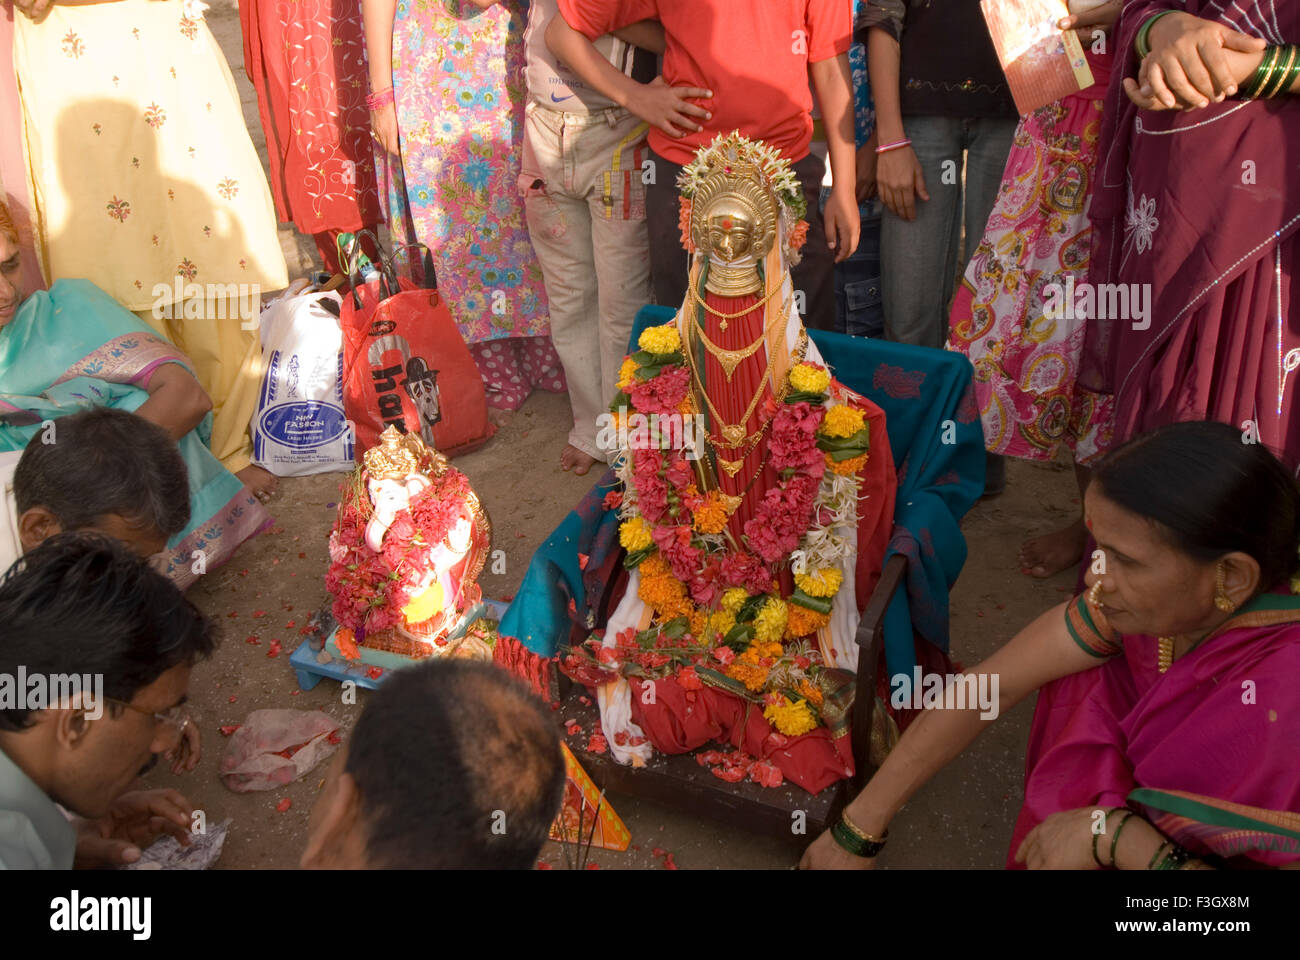 Gauri ganpati hi-res stock photography and images - Alamy